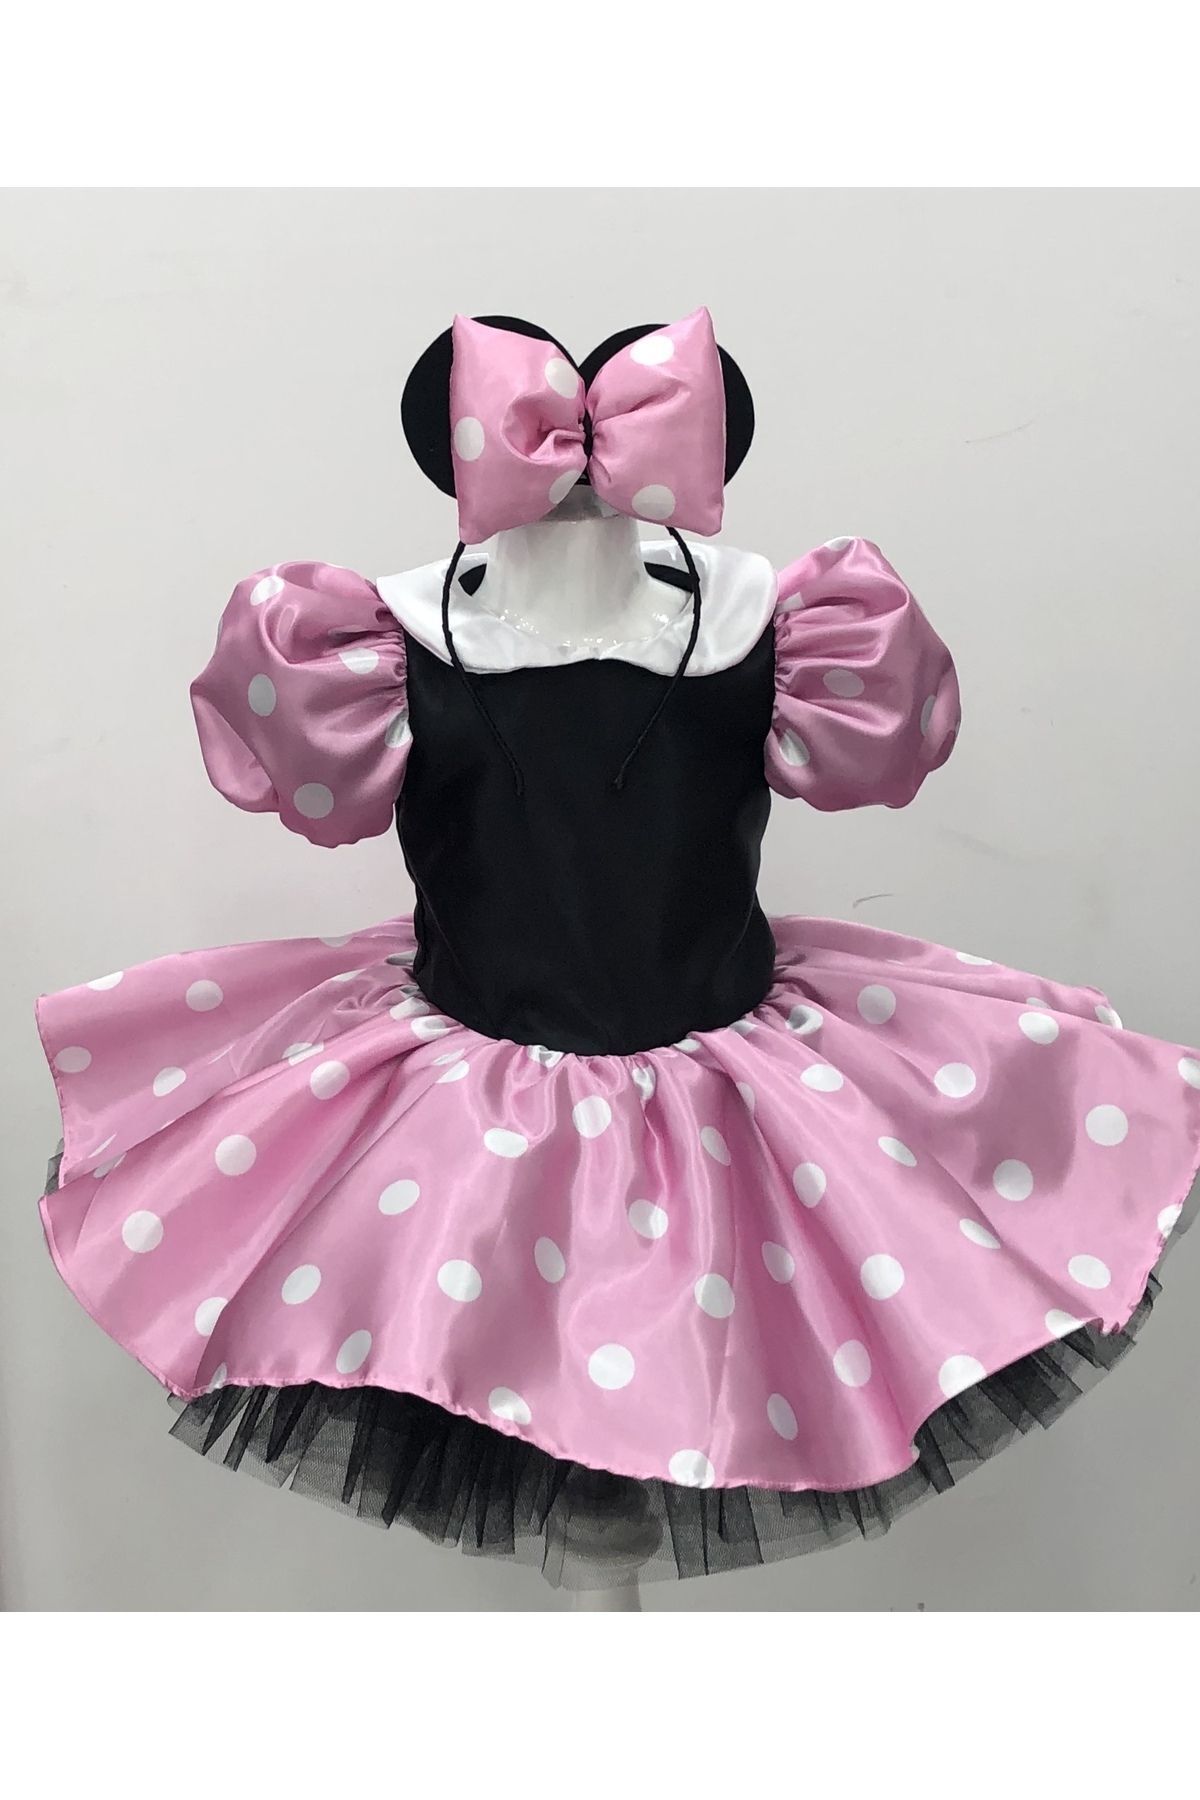 YAĞMUR KOStütüM Minnie Mouse Kız Çocuk Pembe Doğumgünü Elbisesi & Parti Kostümü